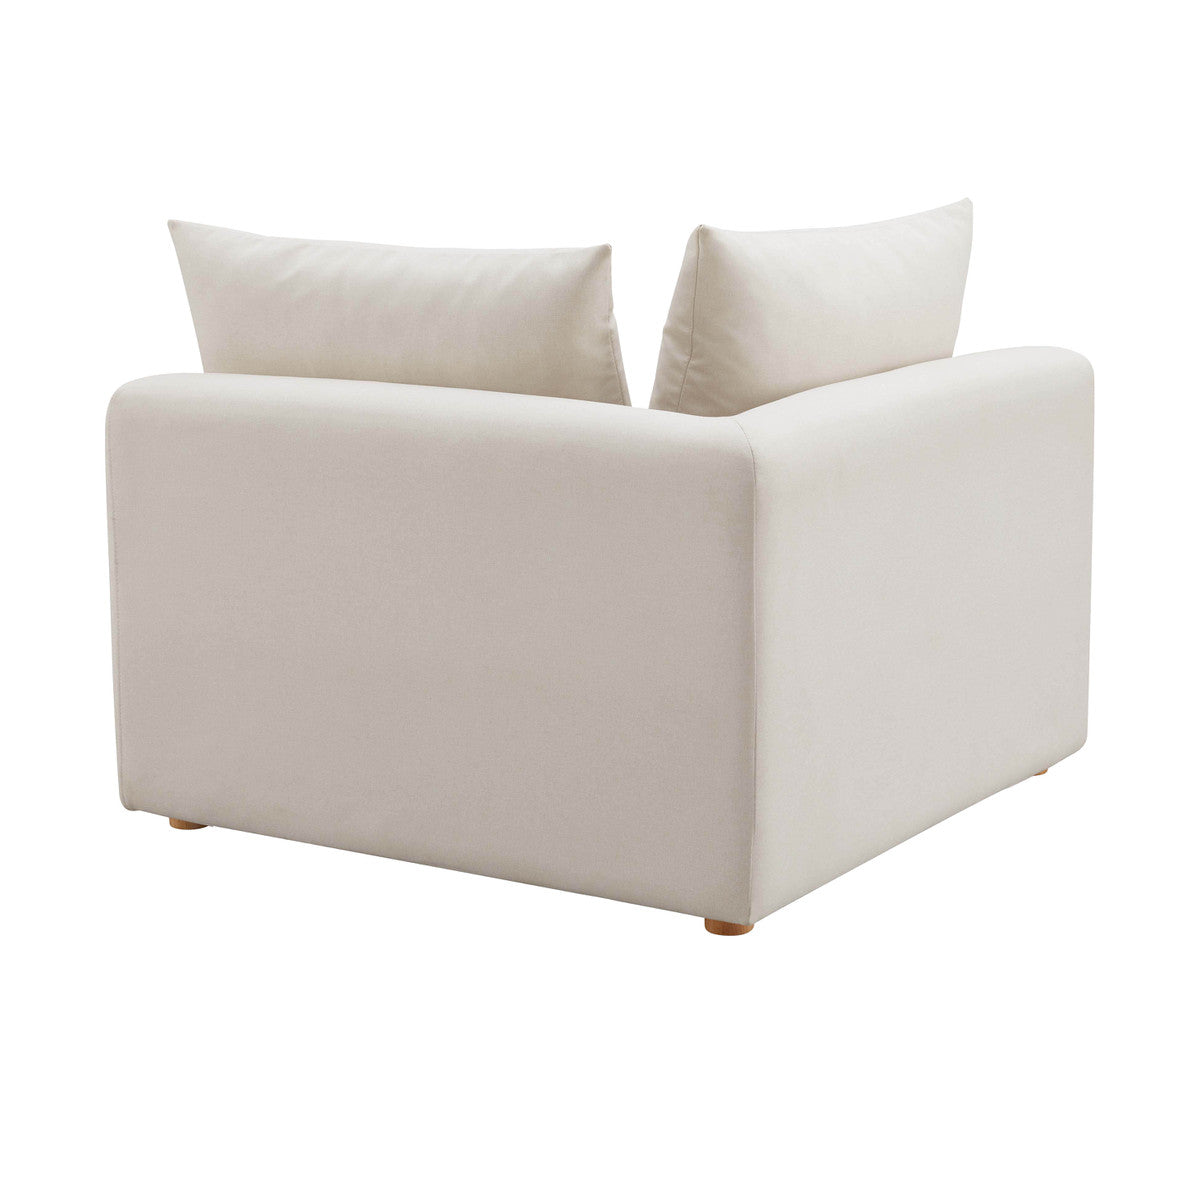 Hangover Cream Modular Corner Chair